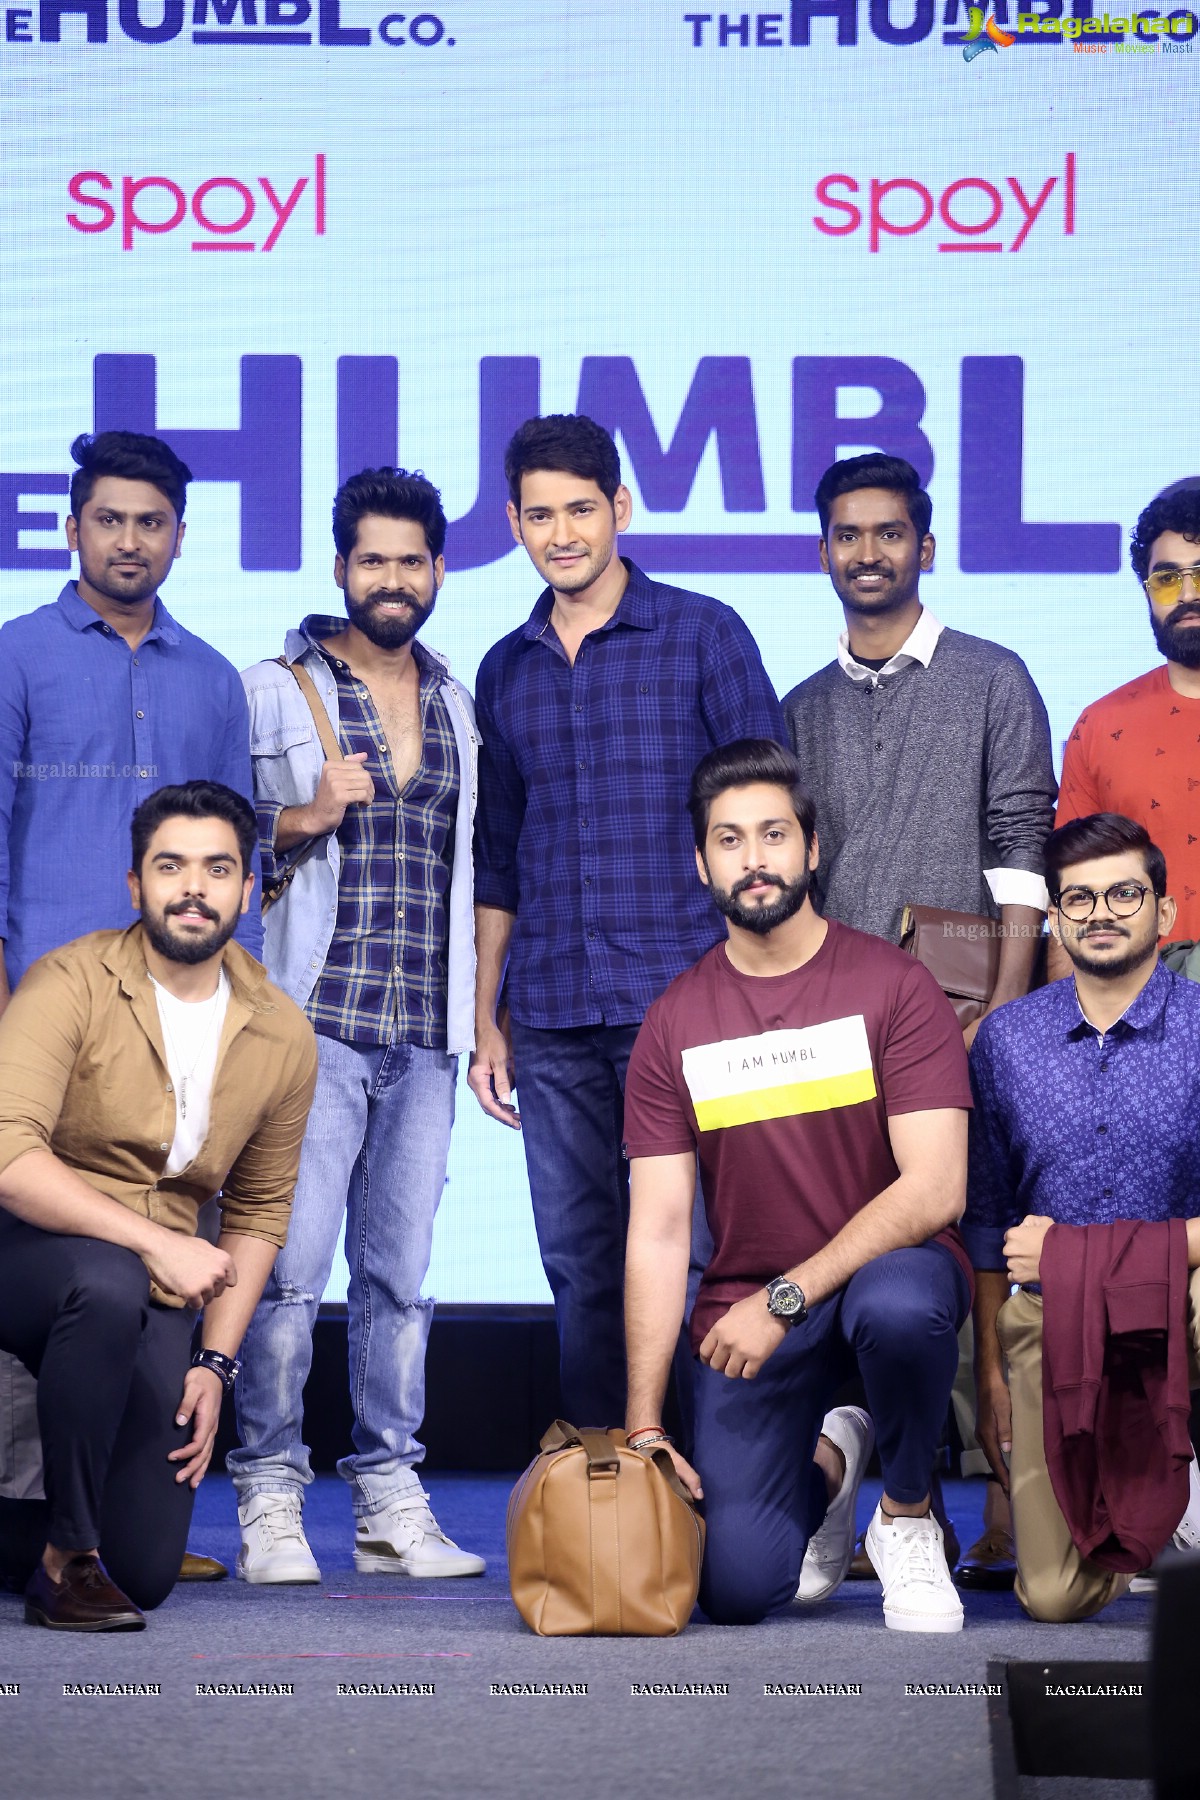 Mahesh Babu's Own Clothing Brand The Humbl Co. Launch